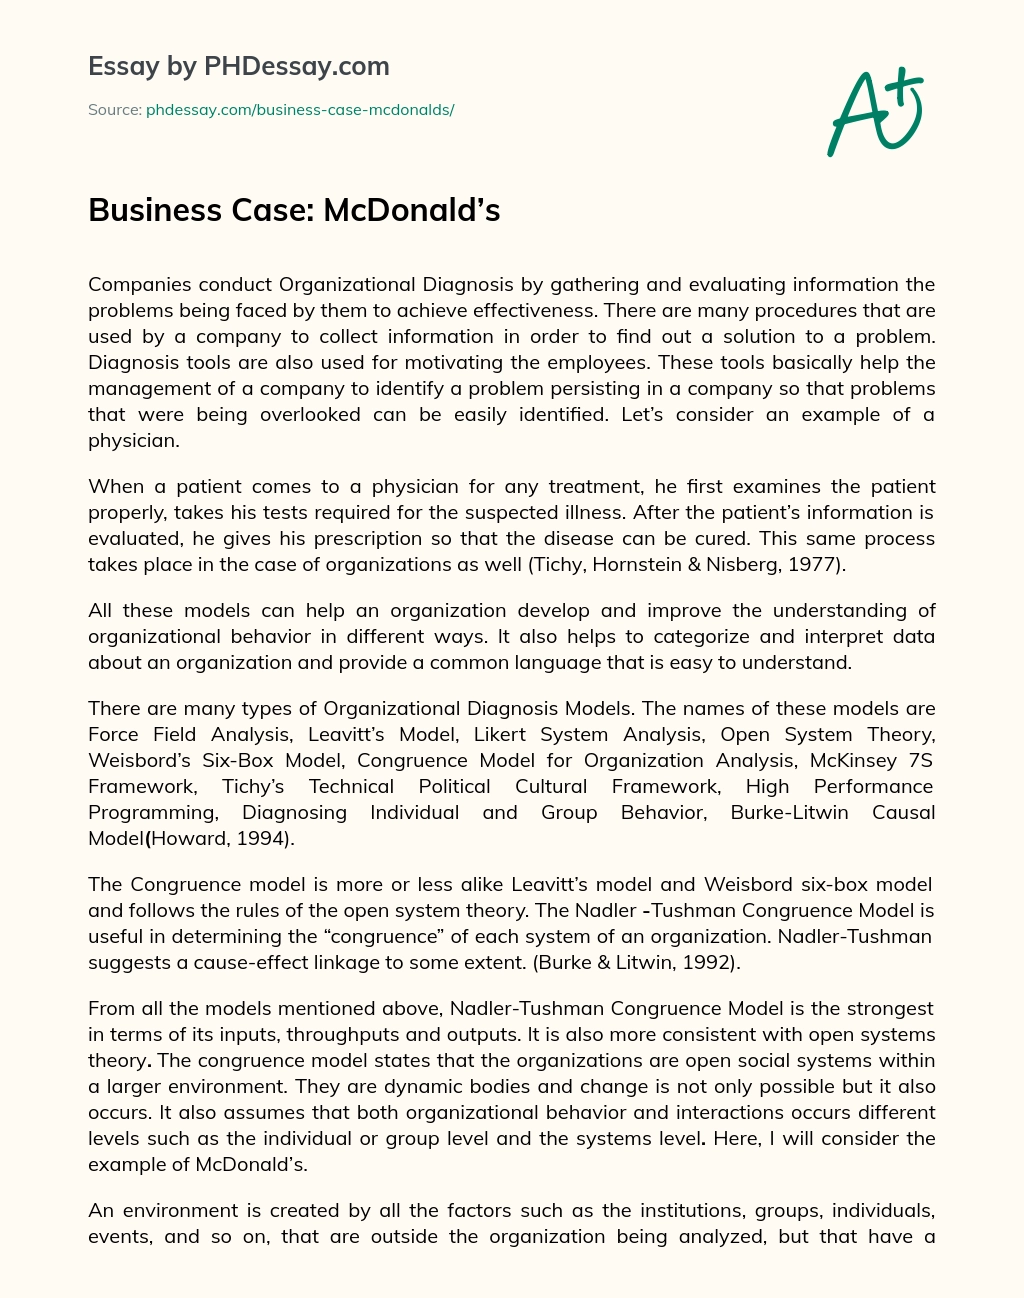 Business Case: McDonald’s essay